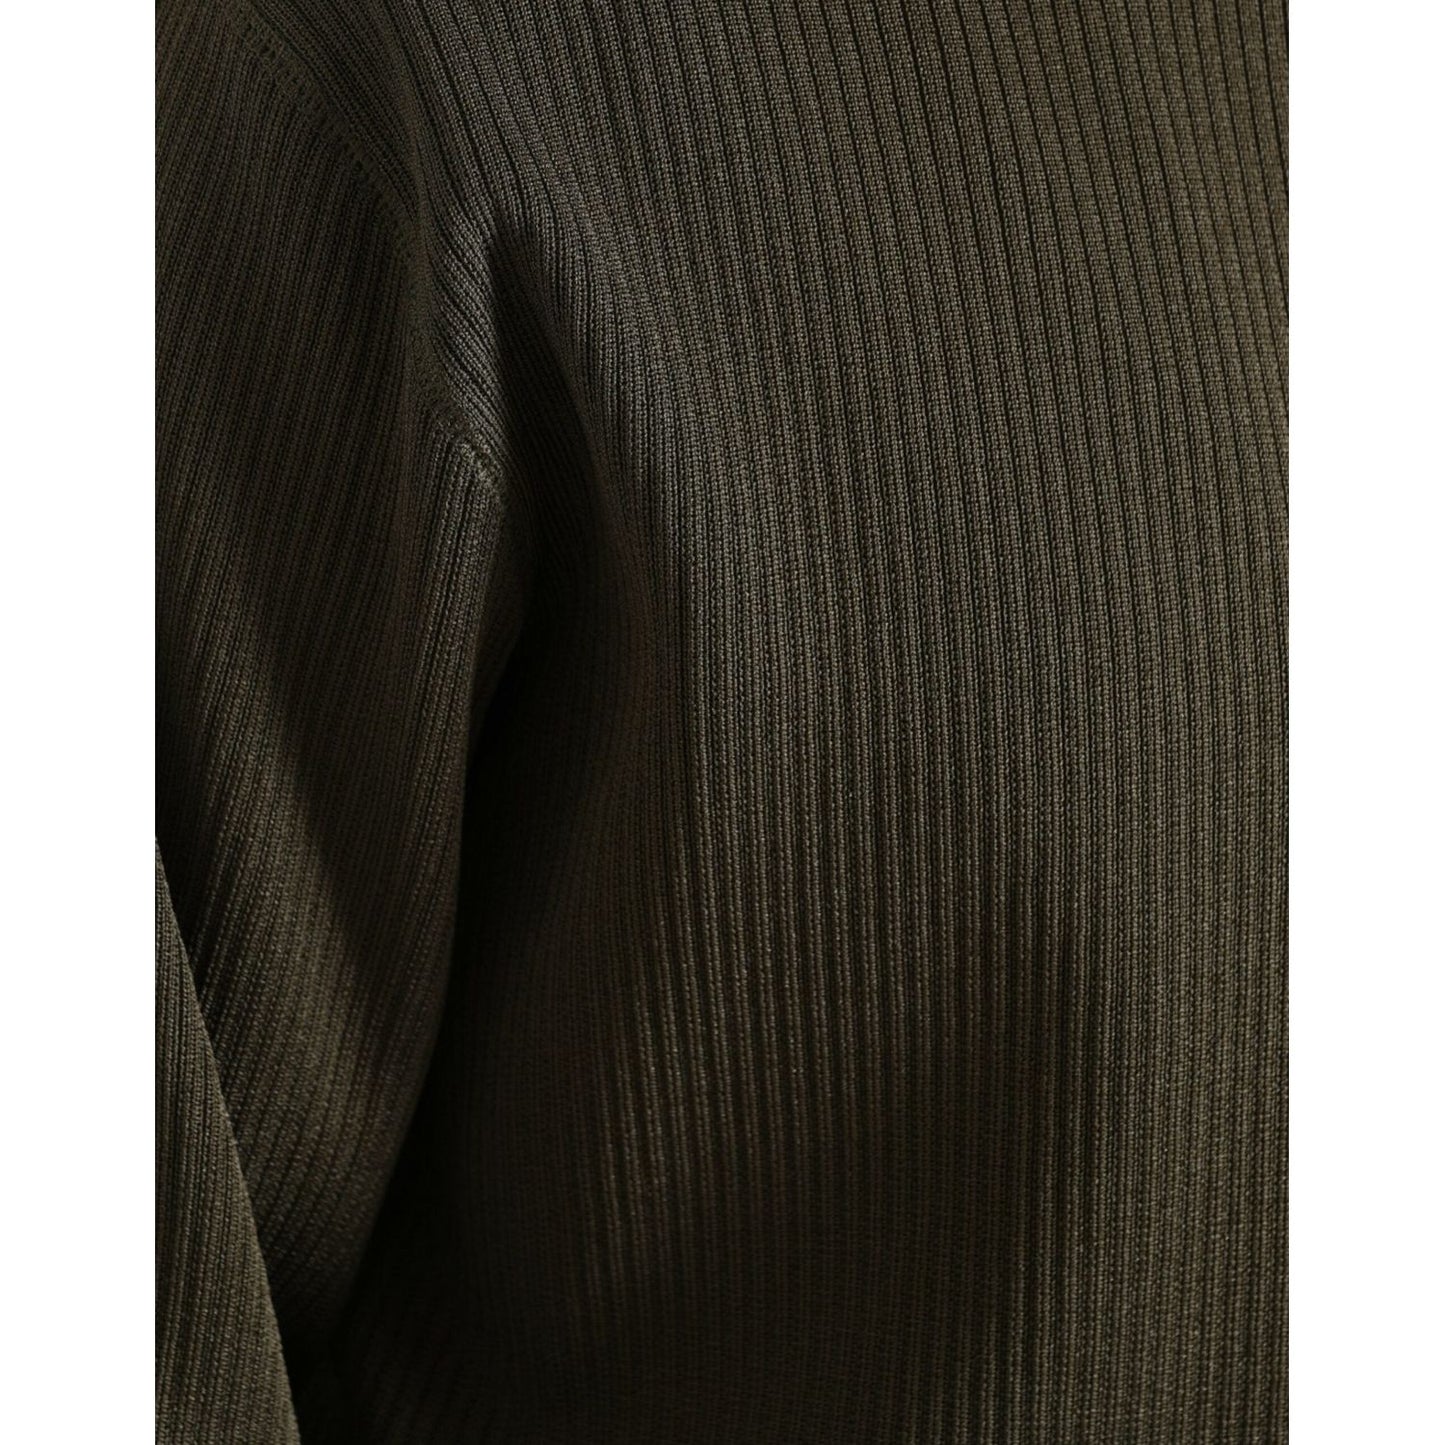 Dolce & Gabbana Elegant Green Crew Neck Sweater green-viscose-crew-neck-men-pullover-sweater 465A2372-BG-scaled-7d34f437-a84.jpg